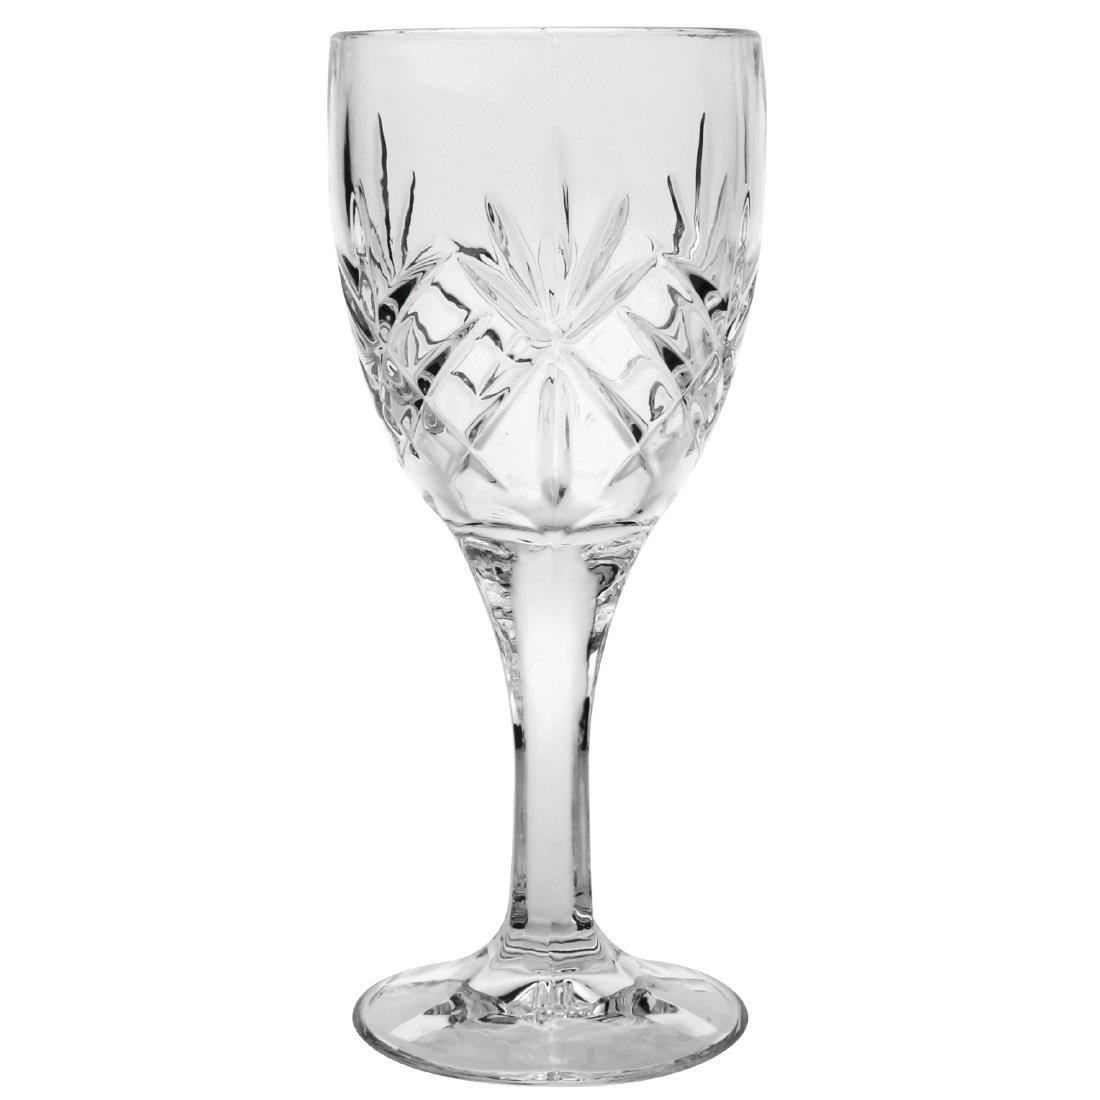 Olympia Old Duke Wine Glass 280ml (Pack of 6) - CW390  - 1